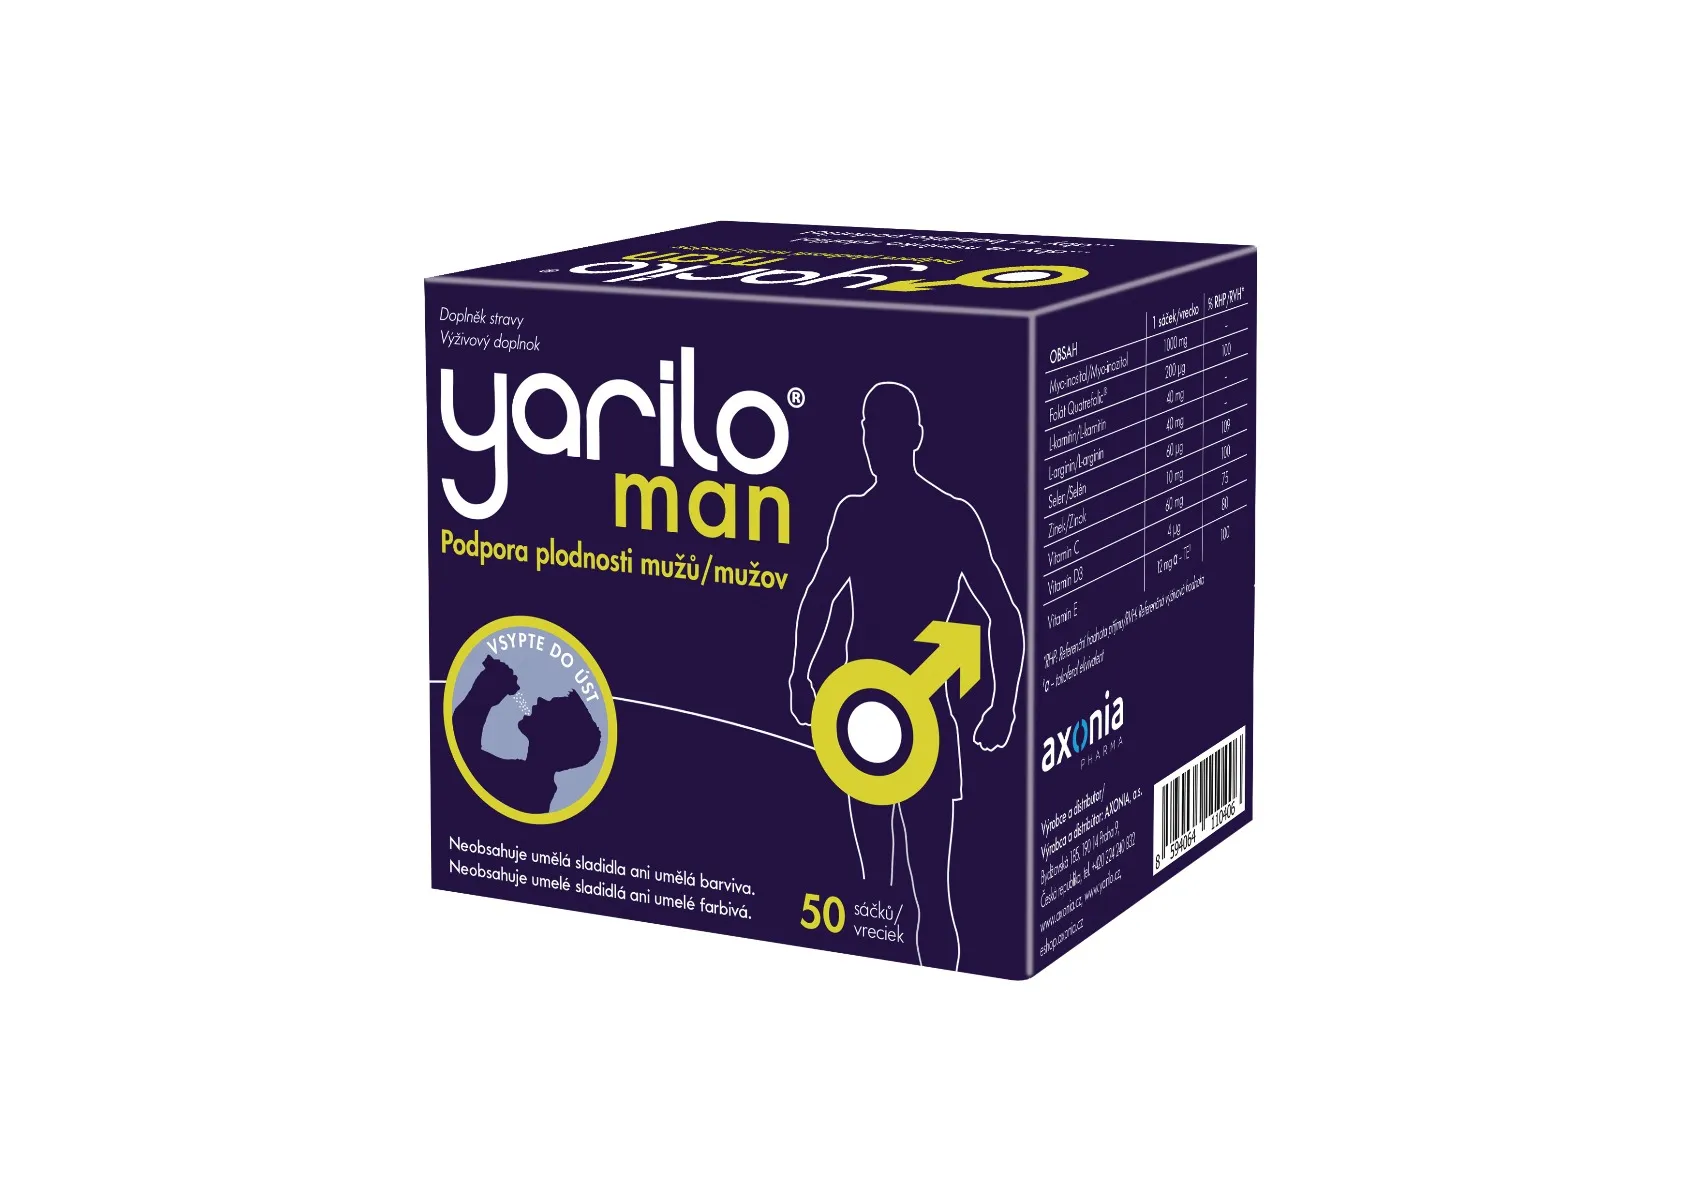 Yarilo man